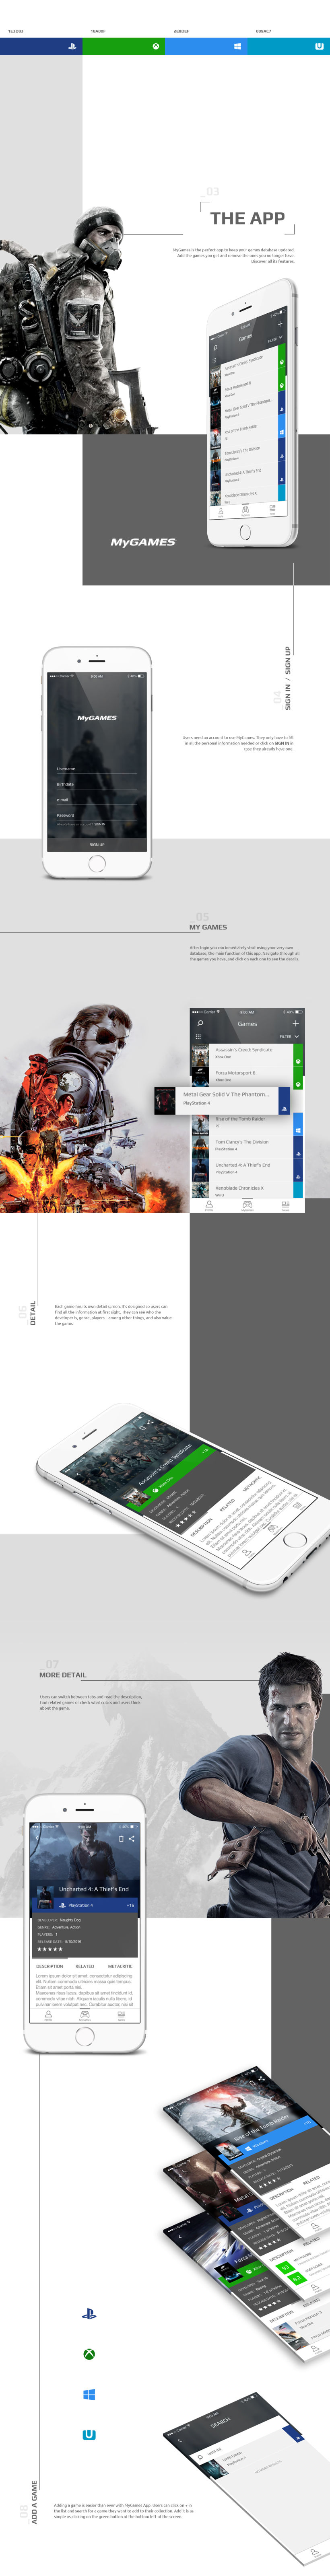 MyGAMES - Mobile App Design 1